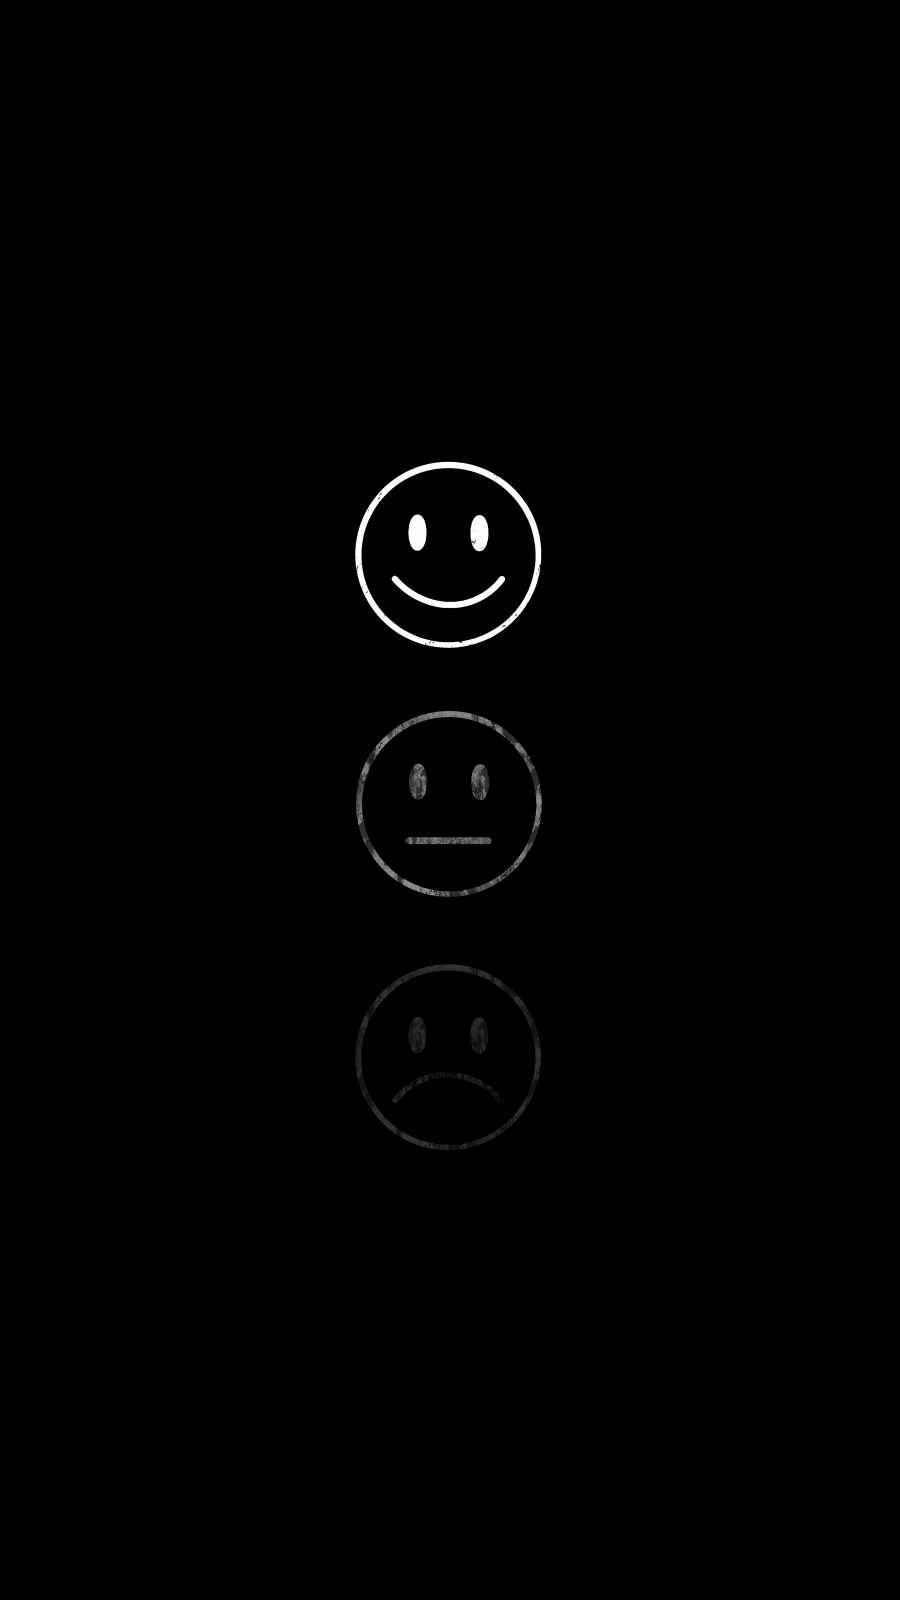 Sad Emojis Iphone Background